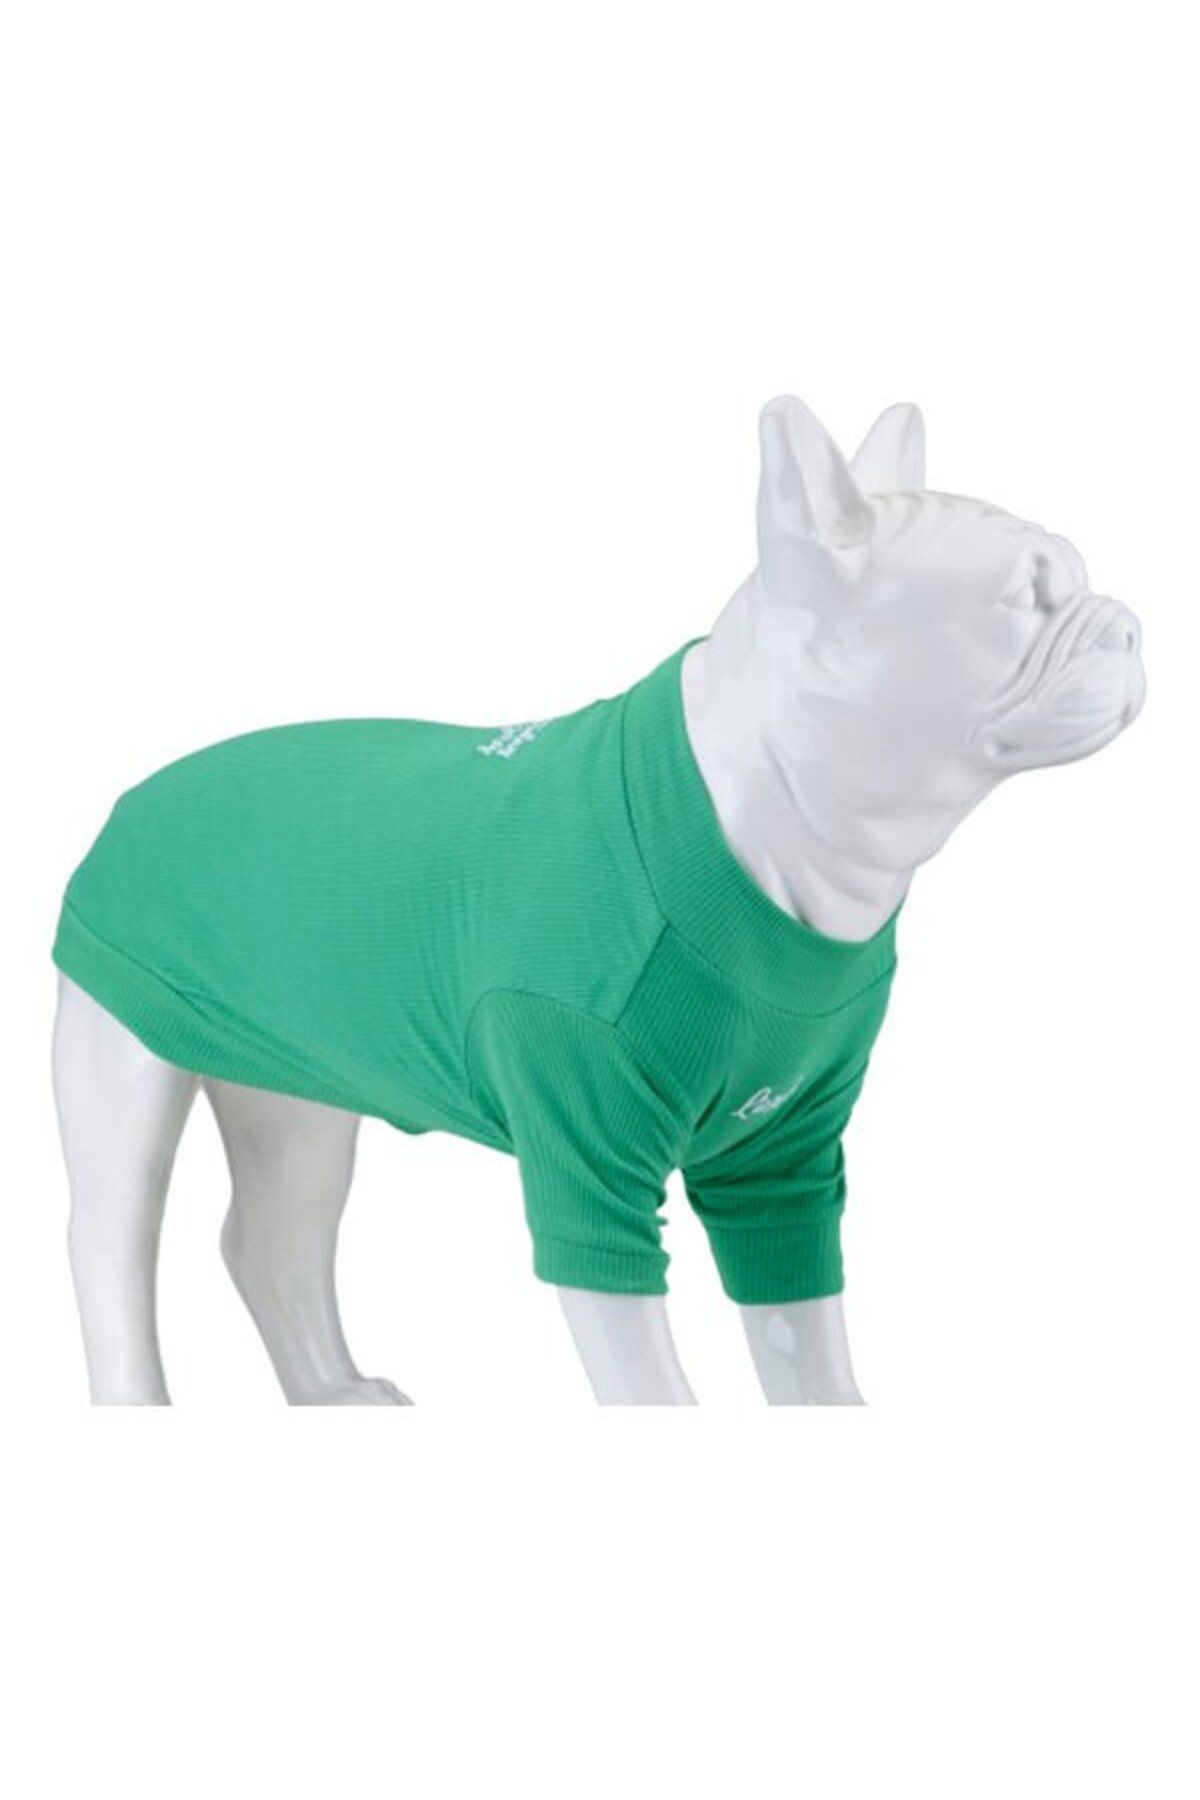 Lindodogs Lindo Dogs Make Today Amazing Köpek Kıyafeti Tshirt Yeşil Beden 3 - MTA03